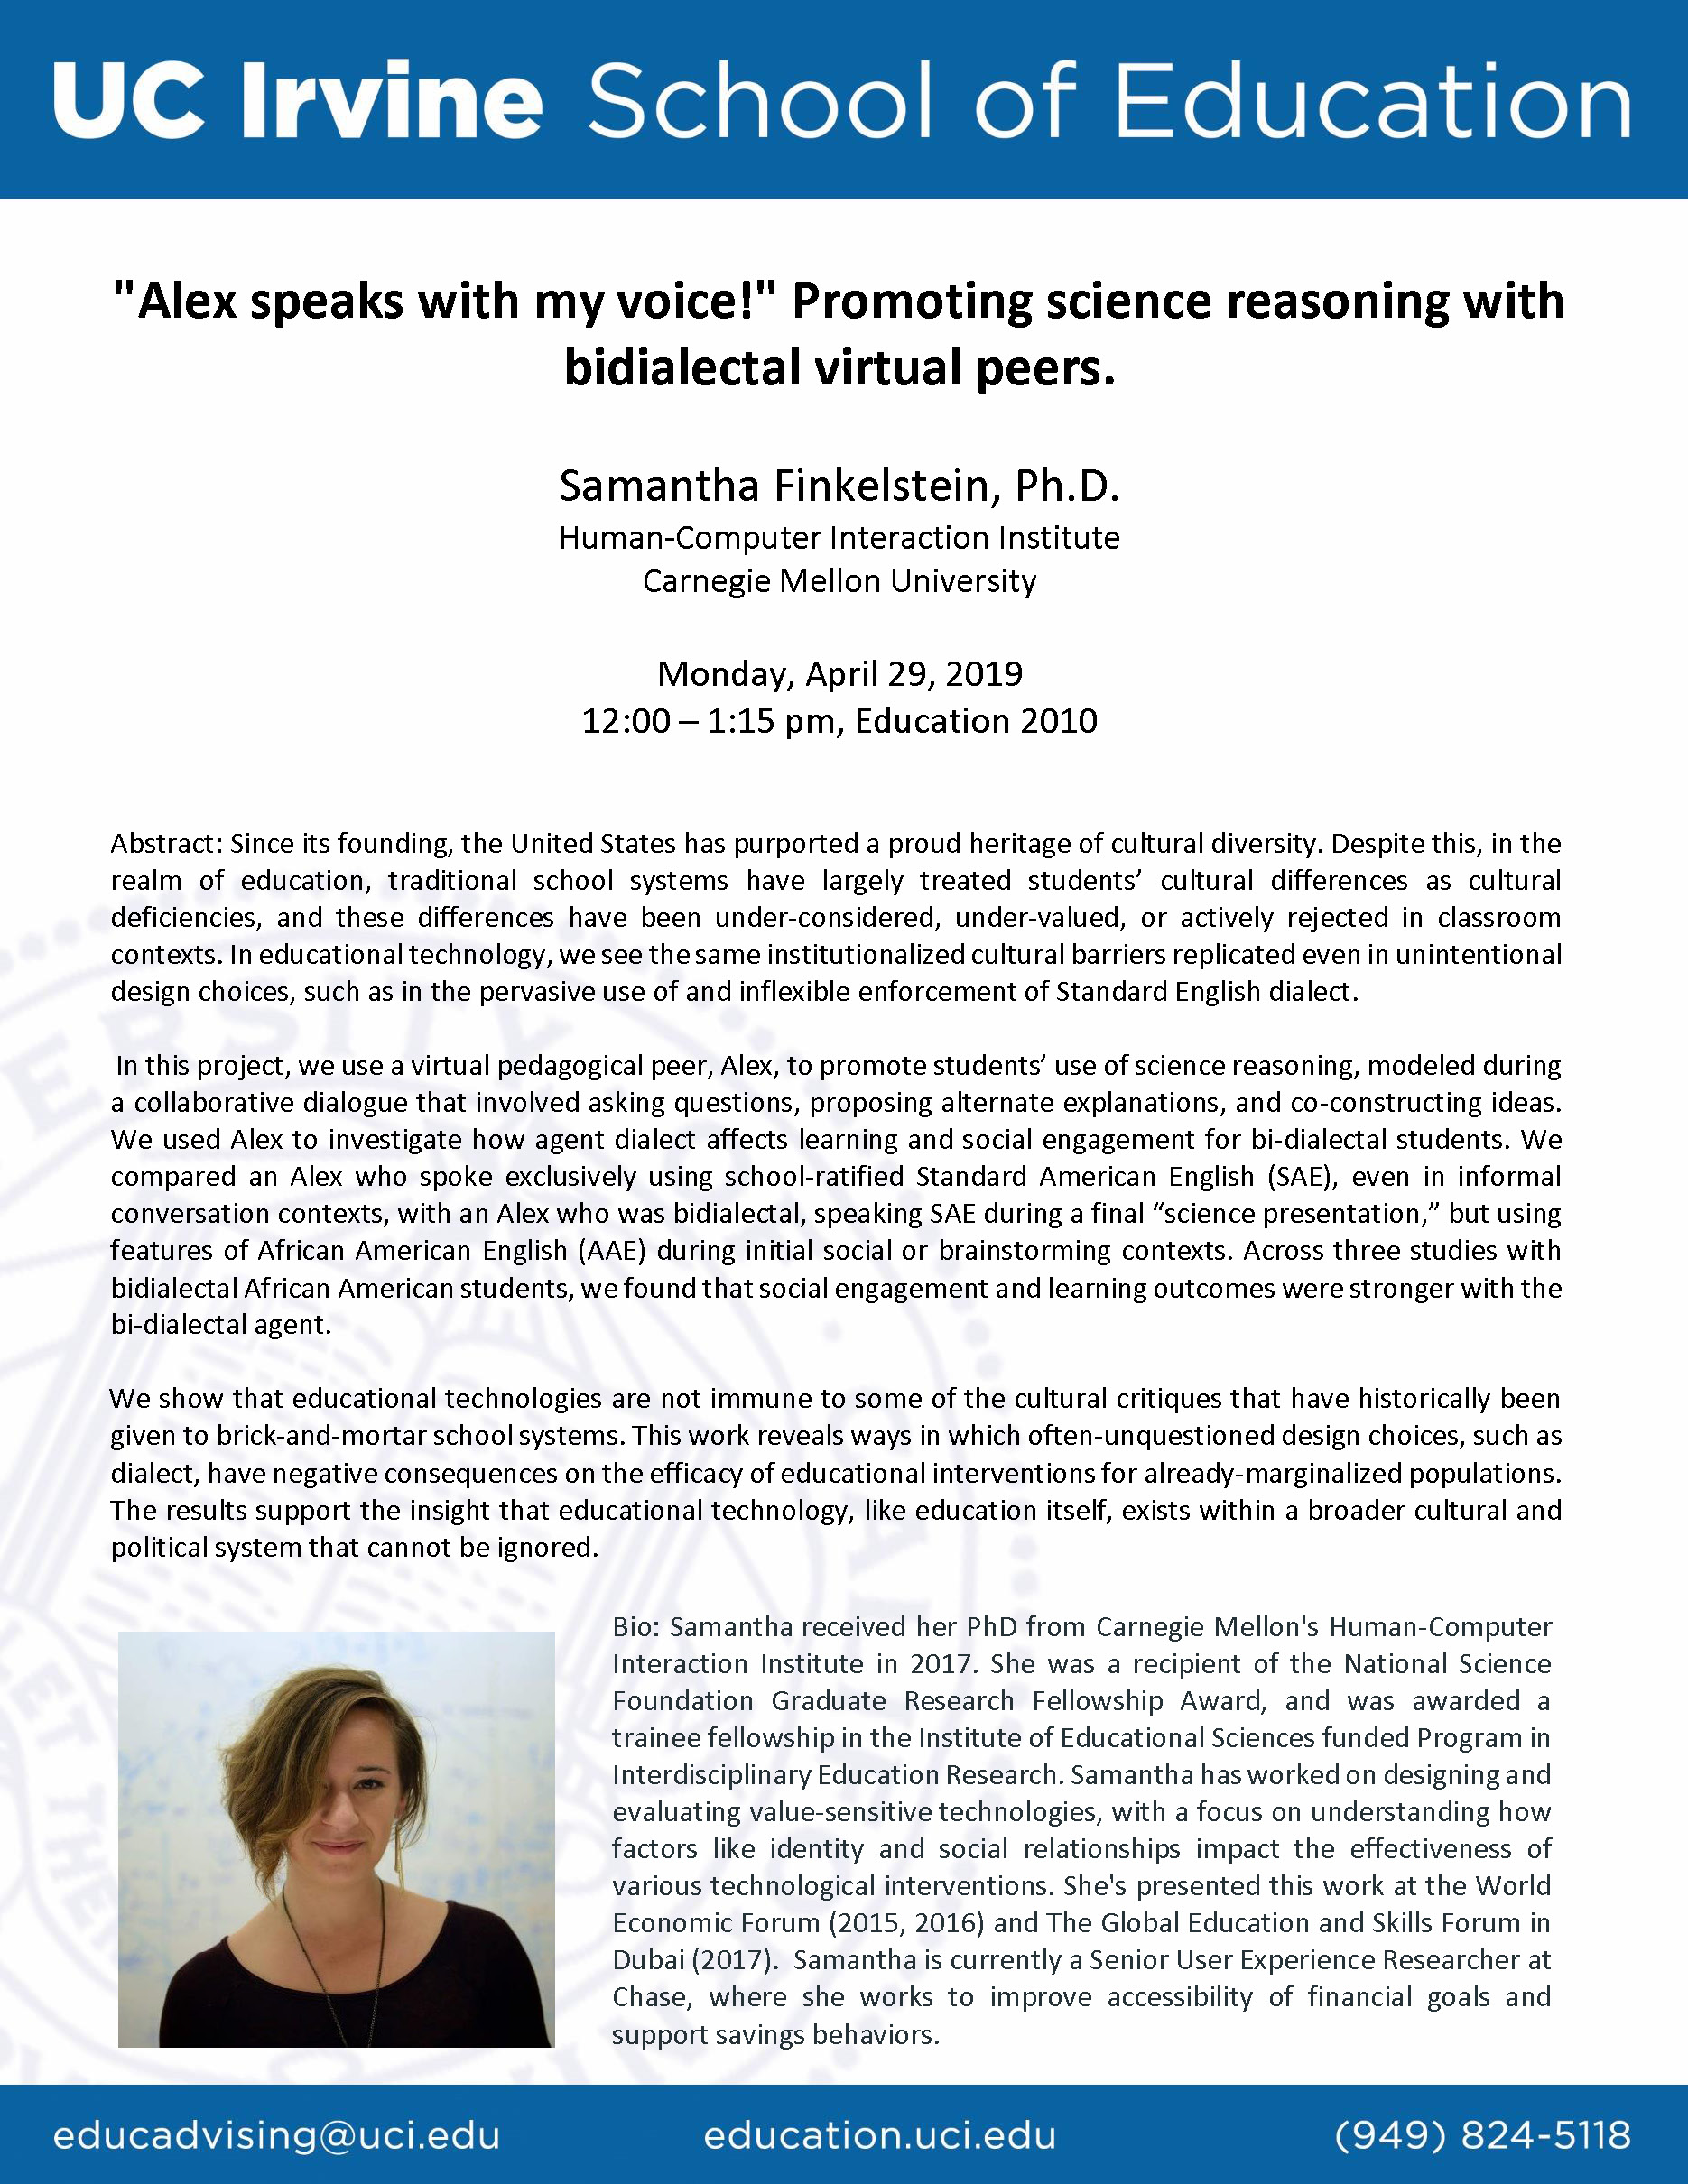 ''Alex speaks with my voice!'' Promoting science reasoning with bidialectal virtual peers.